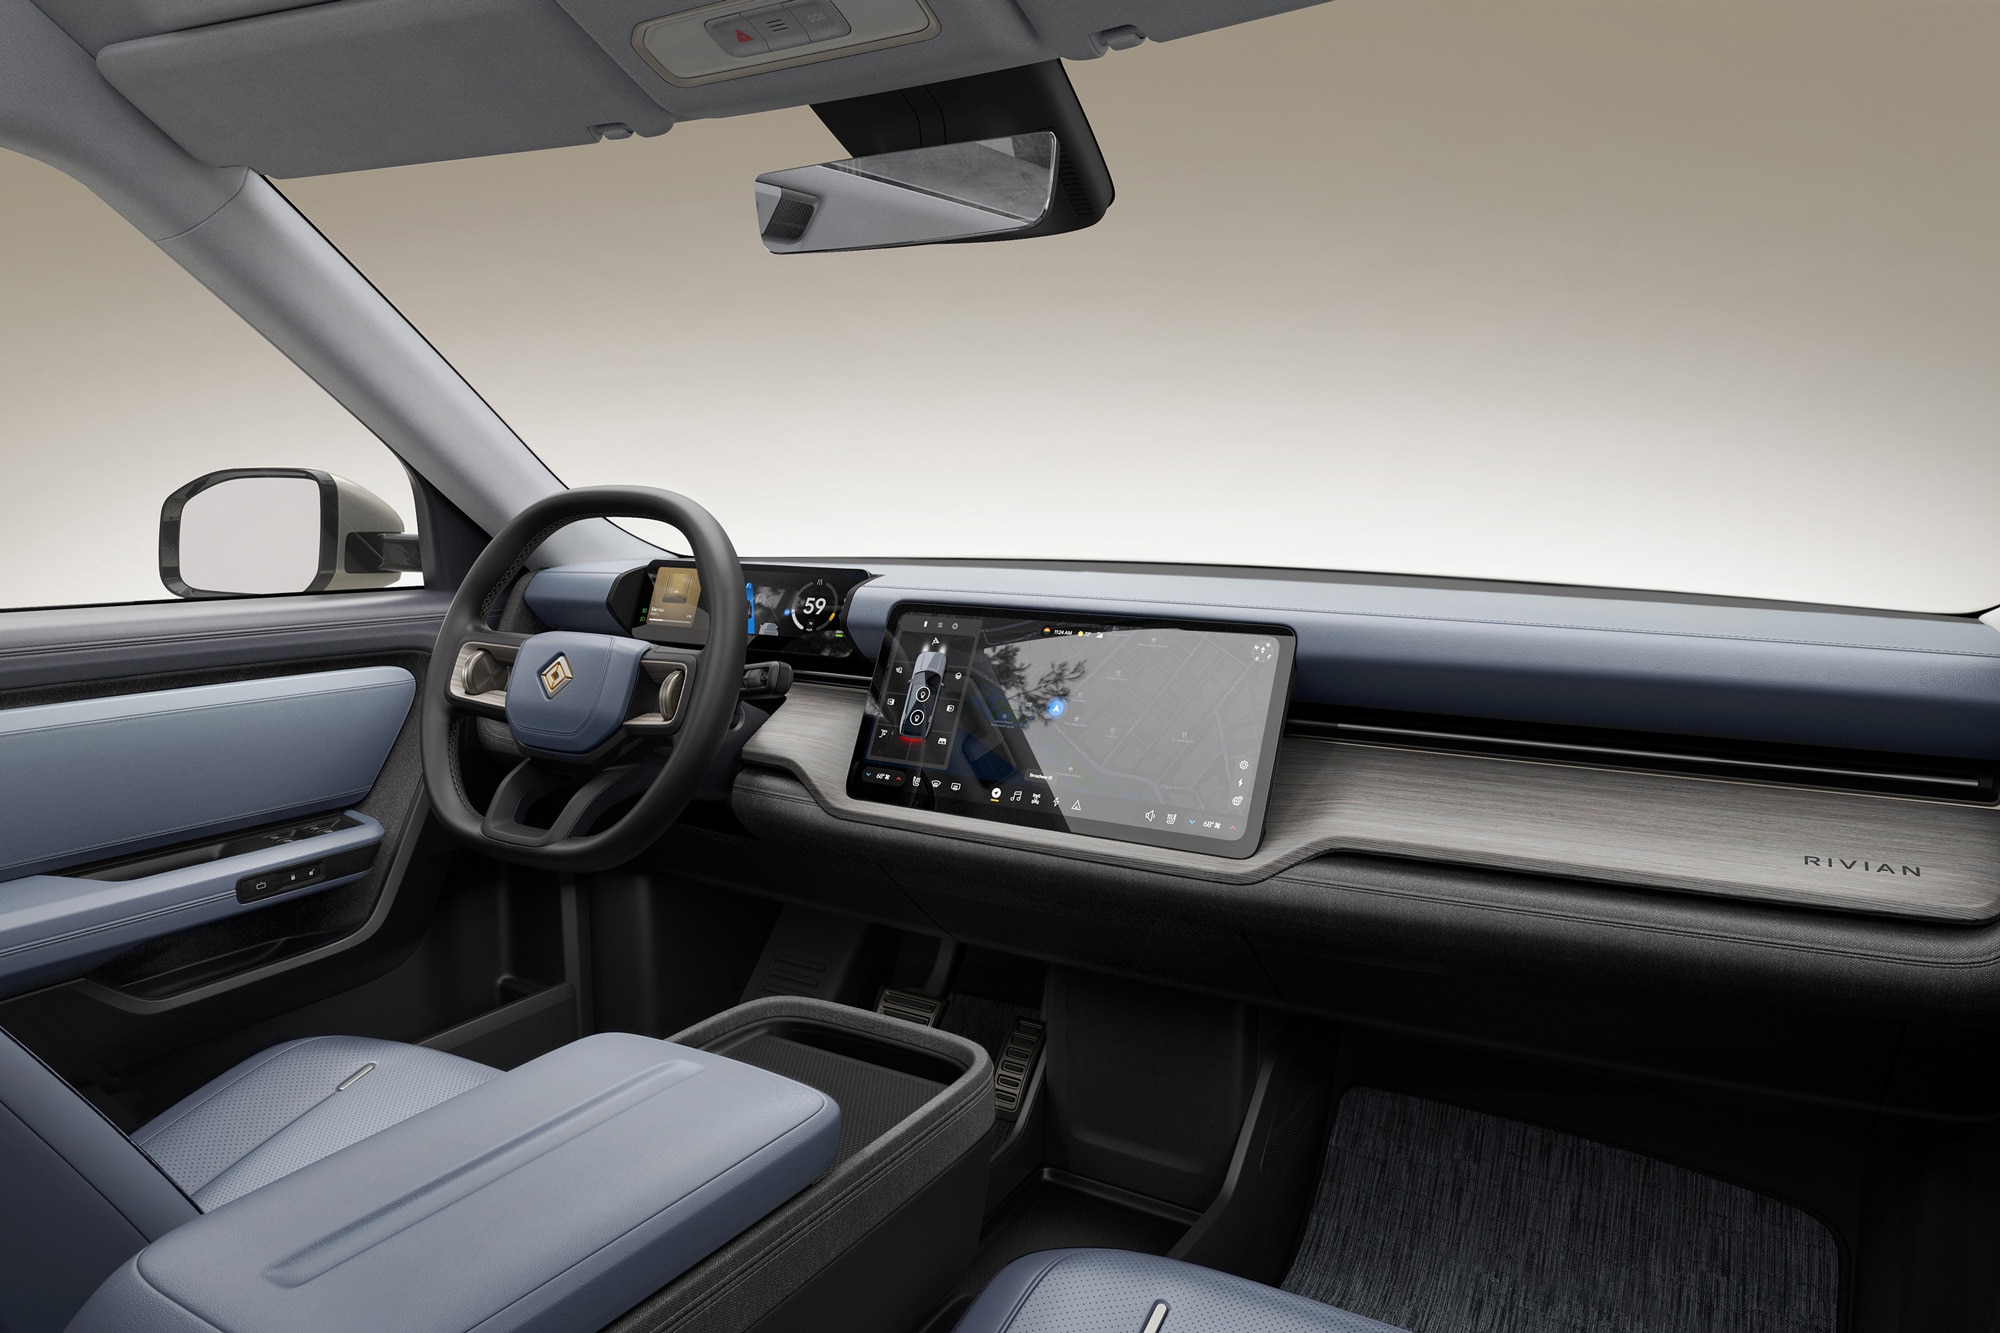 2026 Rivian R2 interior, infotainment screen, and steering wheel.